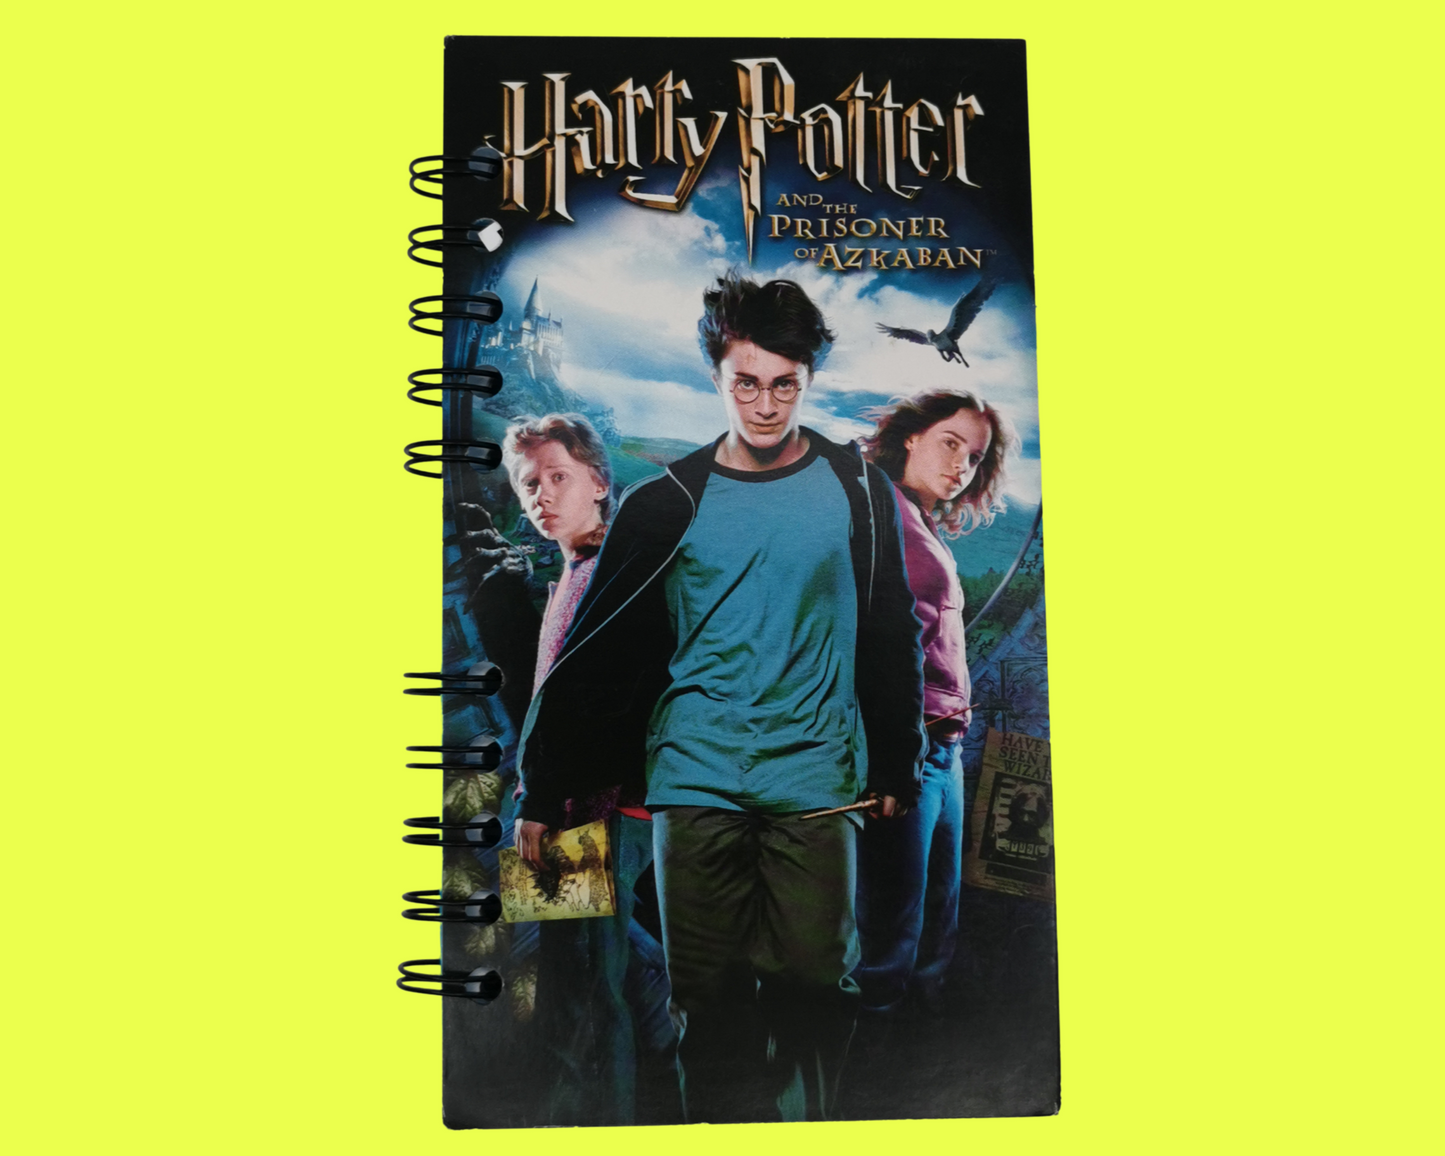 Harry Potter and the Prisoner of Azkaban VHS Movie Notebook